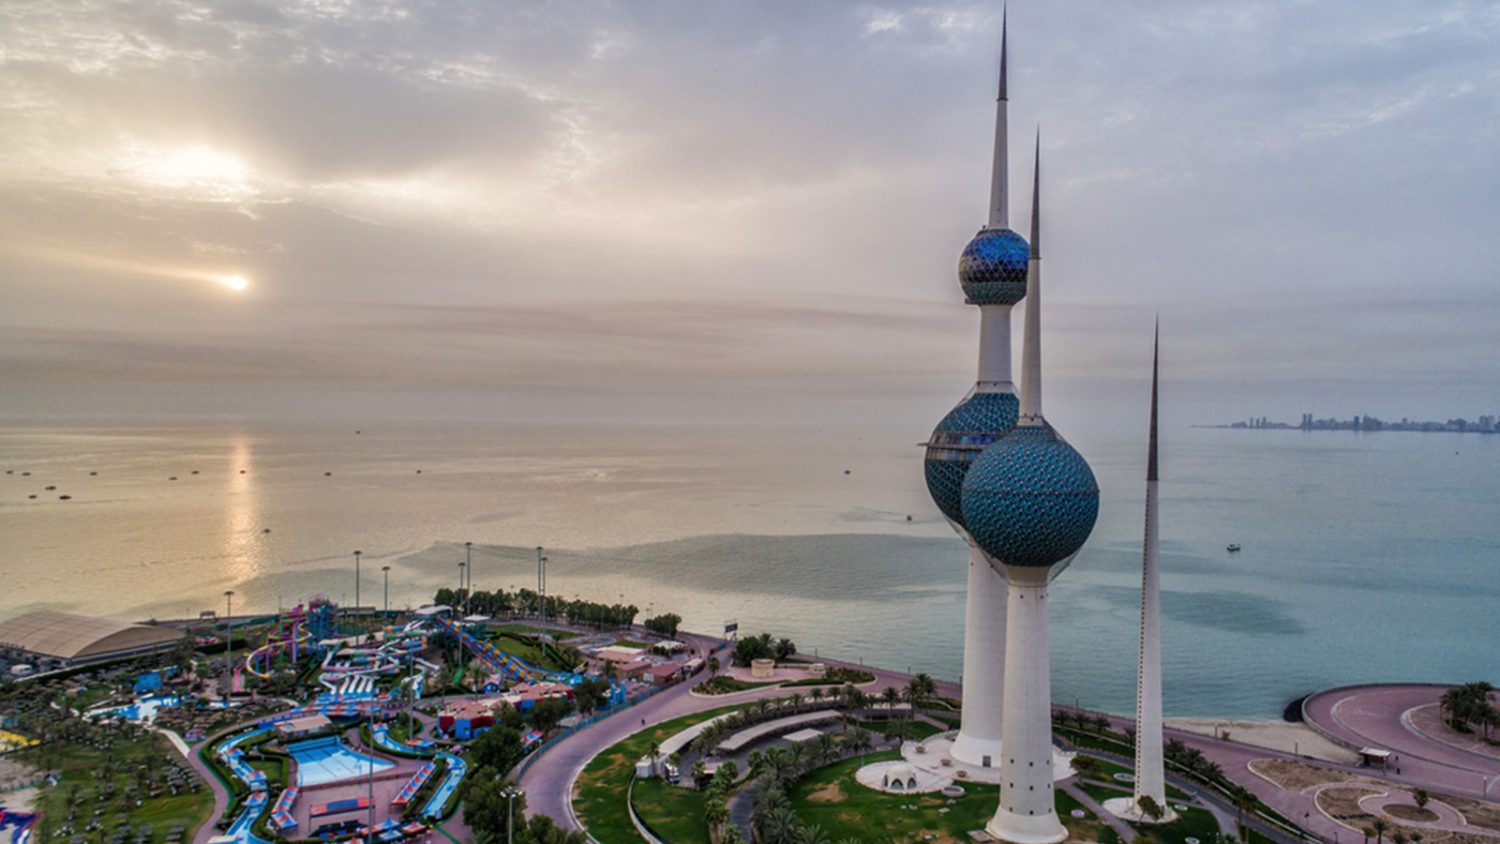 Kuwait Iraq navigate diplomatic waters over maritime agreement